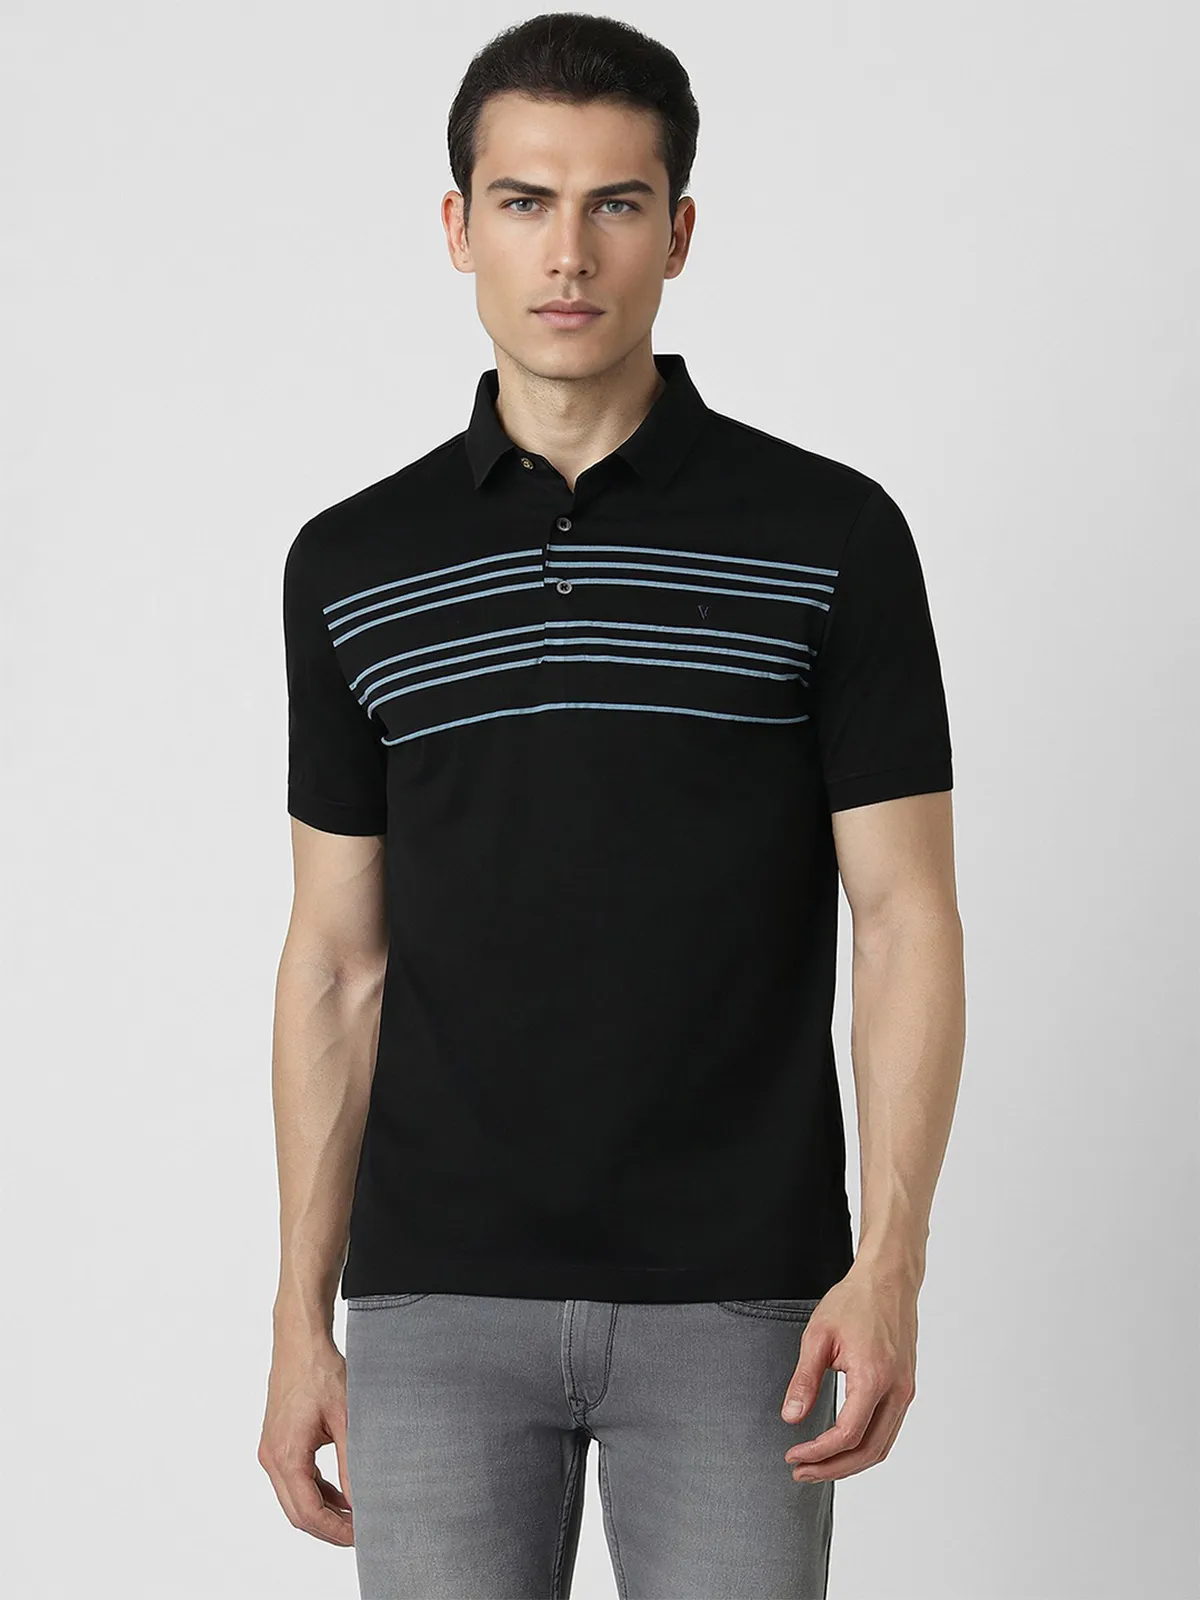 VAN HEUSEN black stripe t-shirt